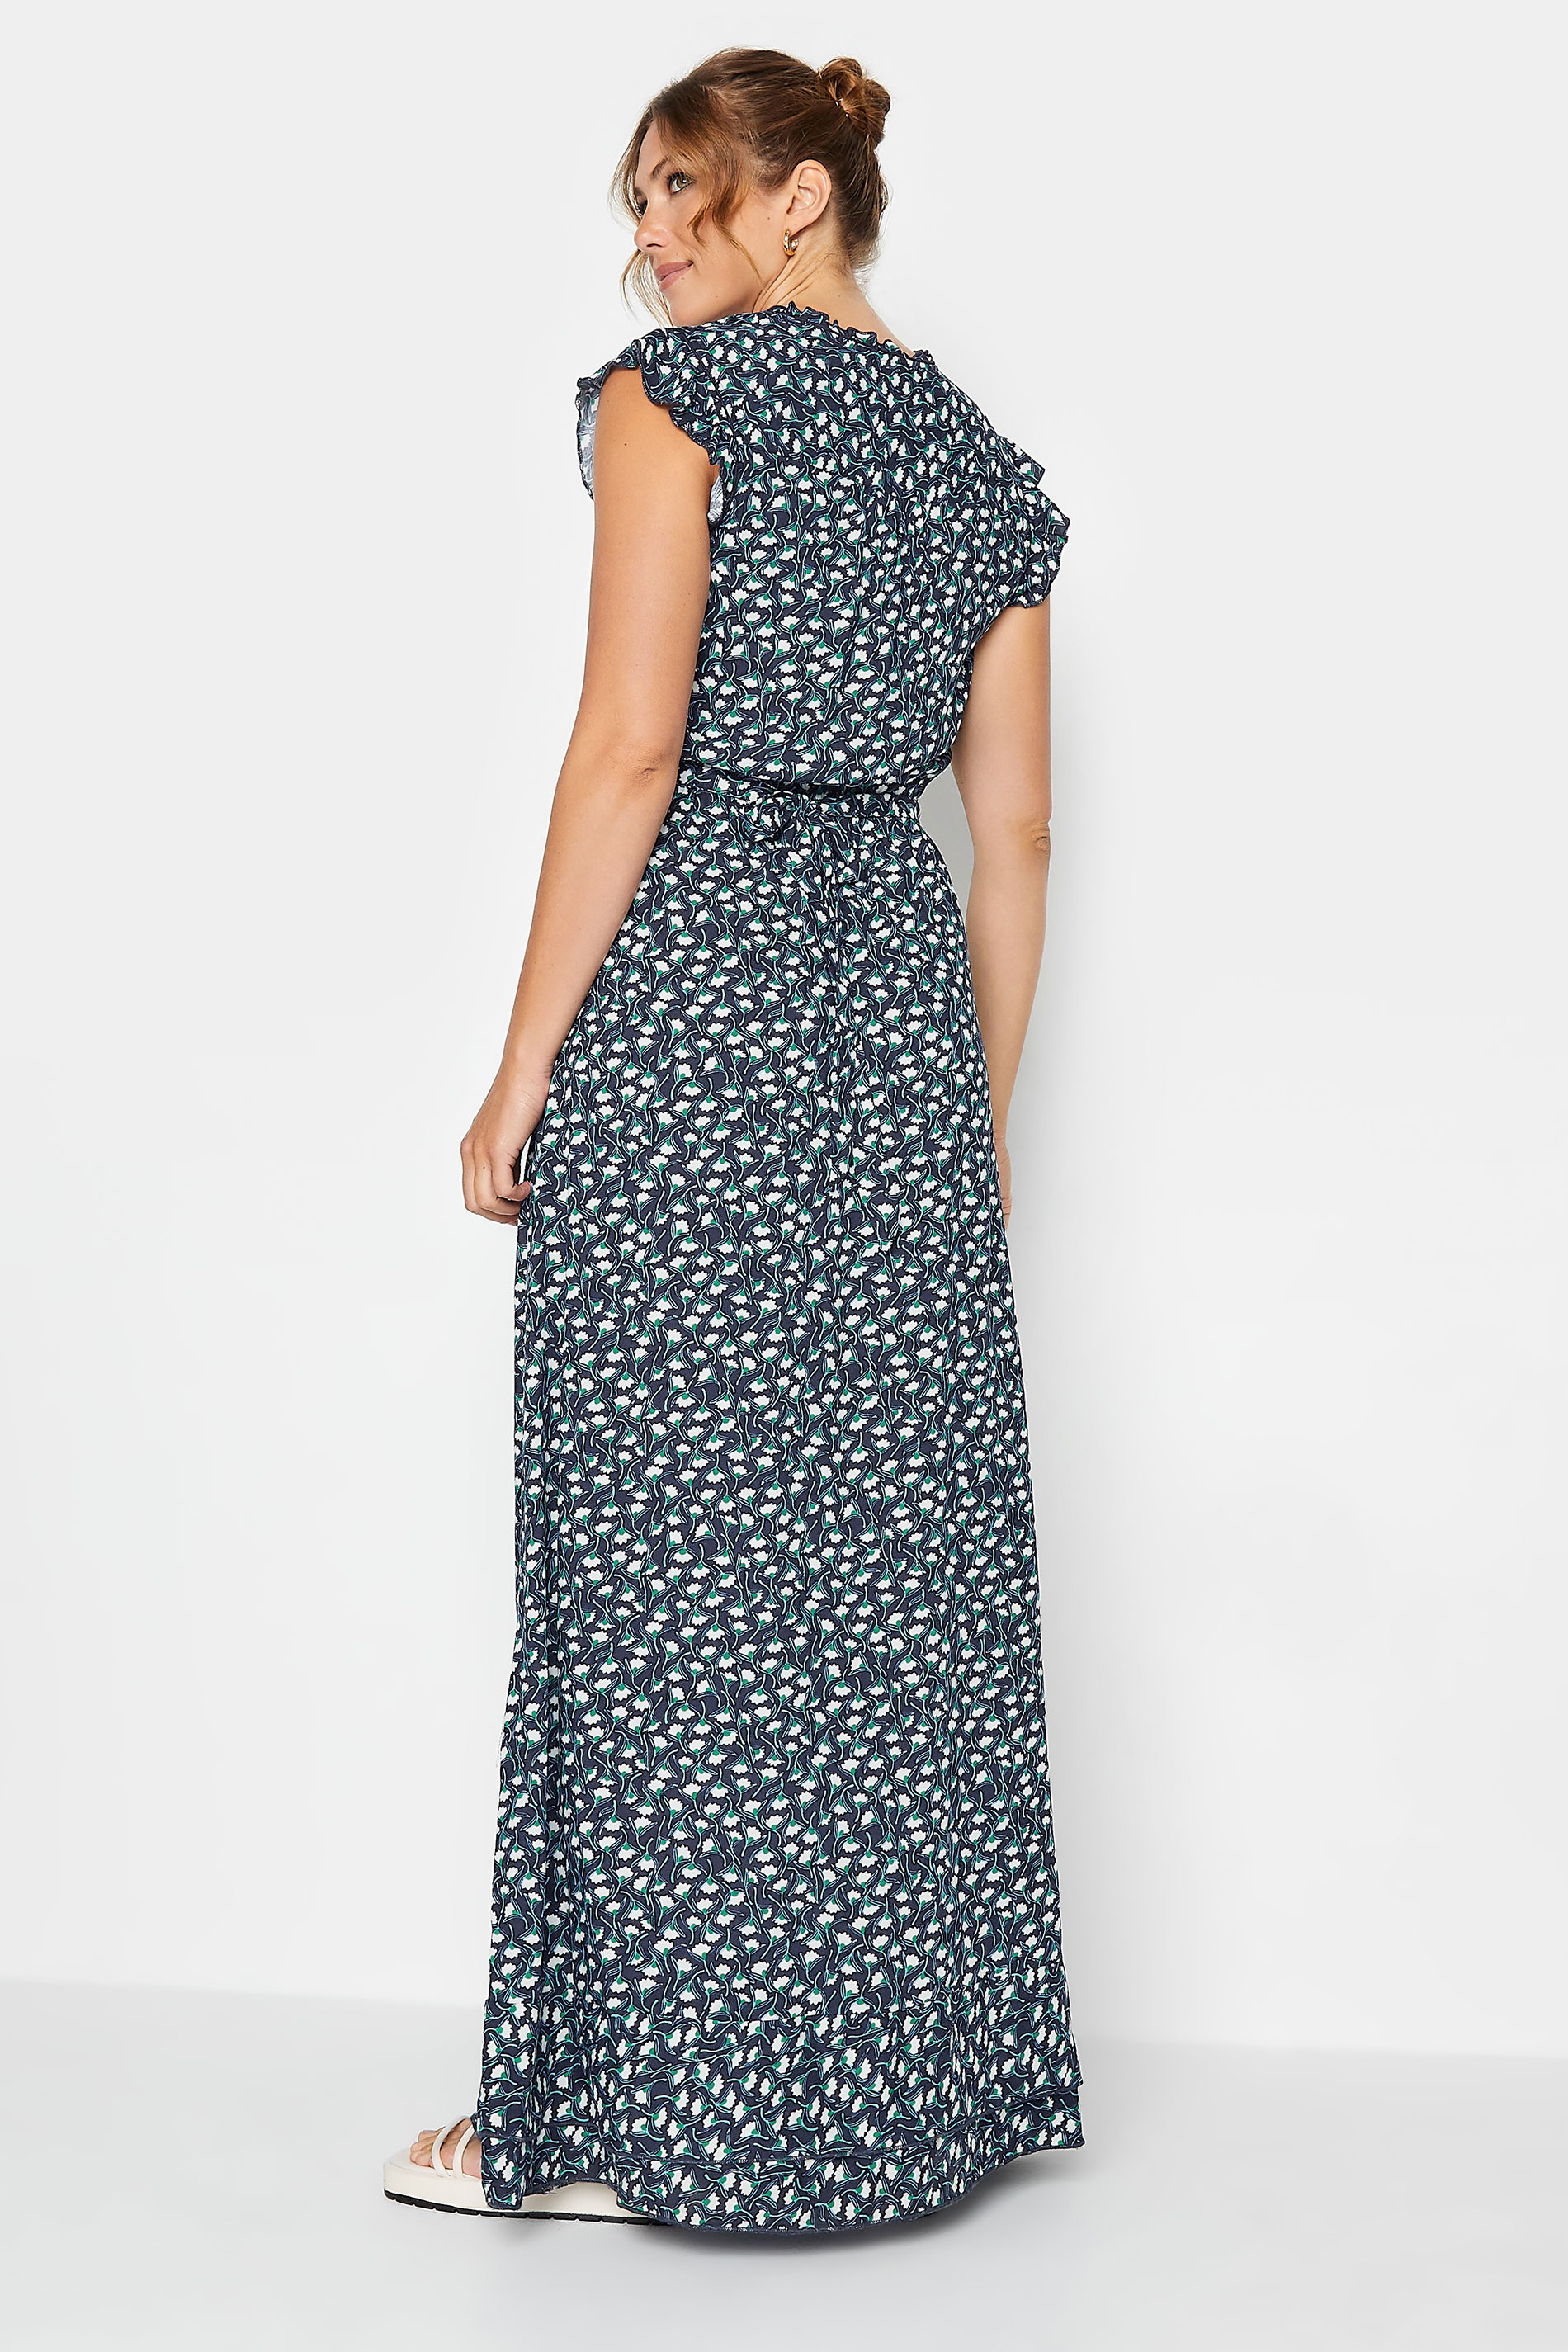 LTS Tall Women's Navy Blue Daisy Print Frill Maxi Dress | Long Tall Sally 3